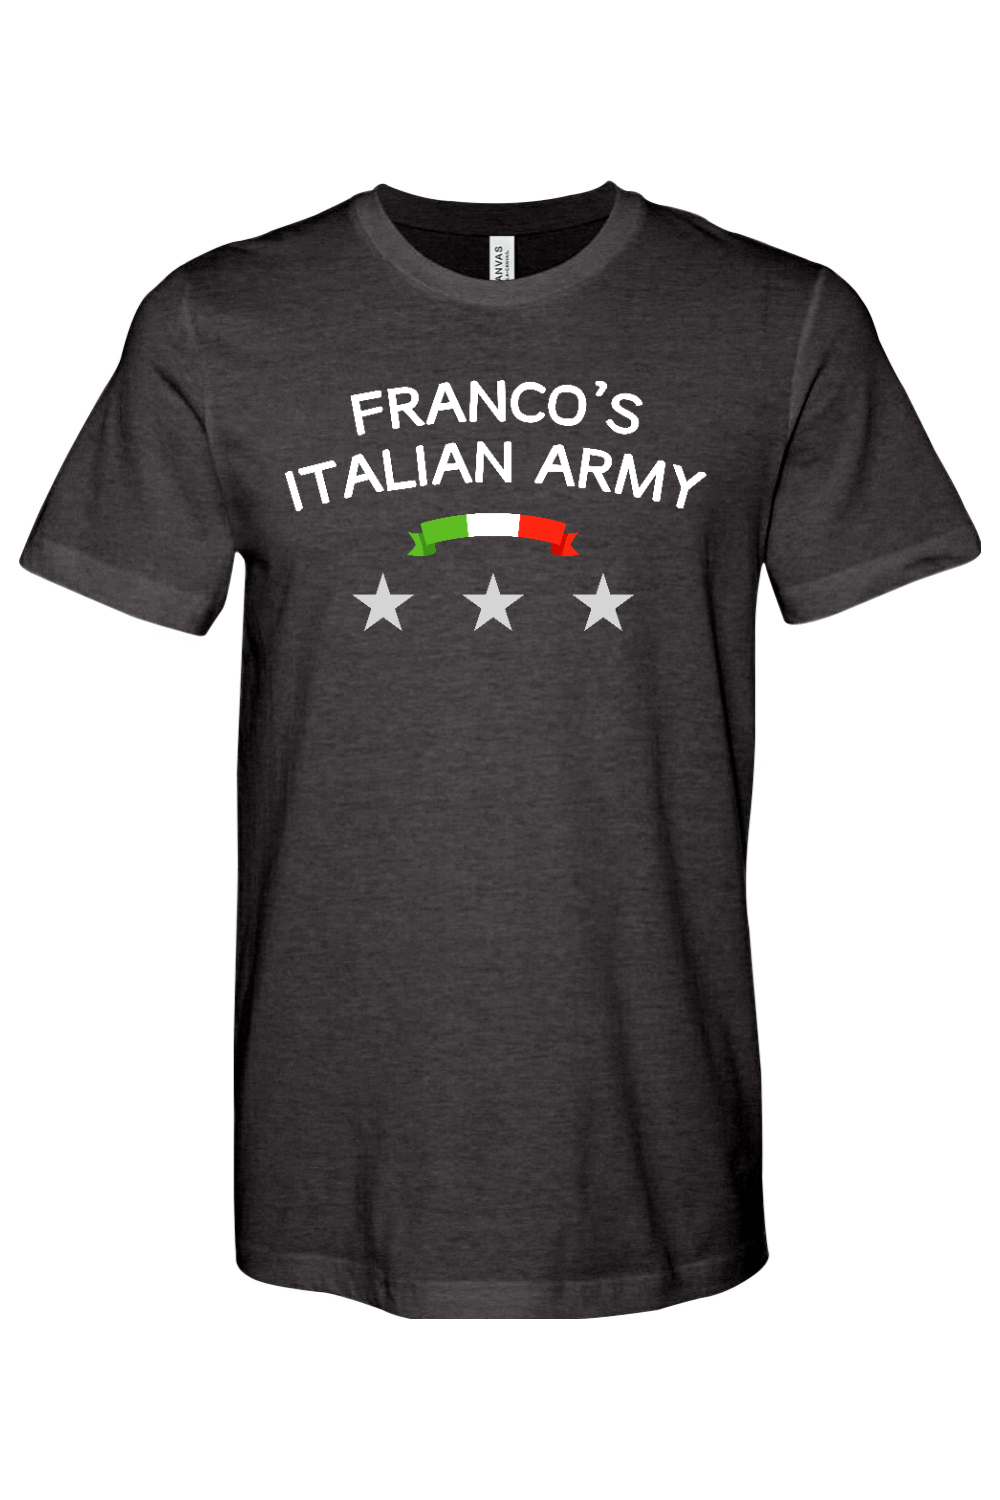 Franco's Italian Army - Bella + Canvas Jersey Tee - Yinzylvania